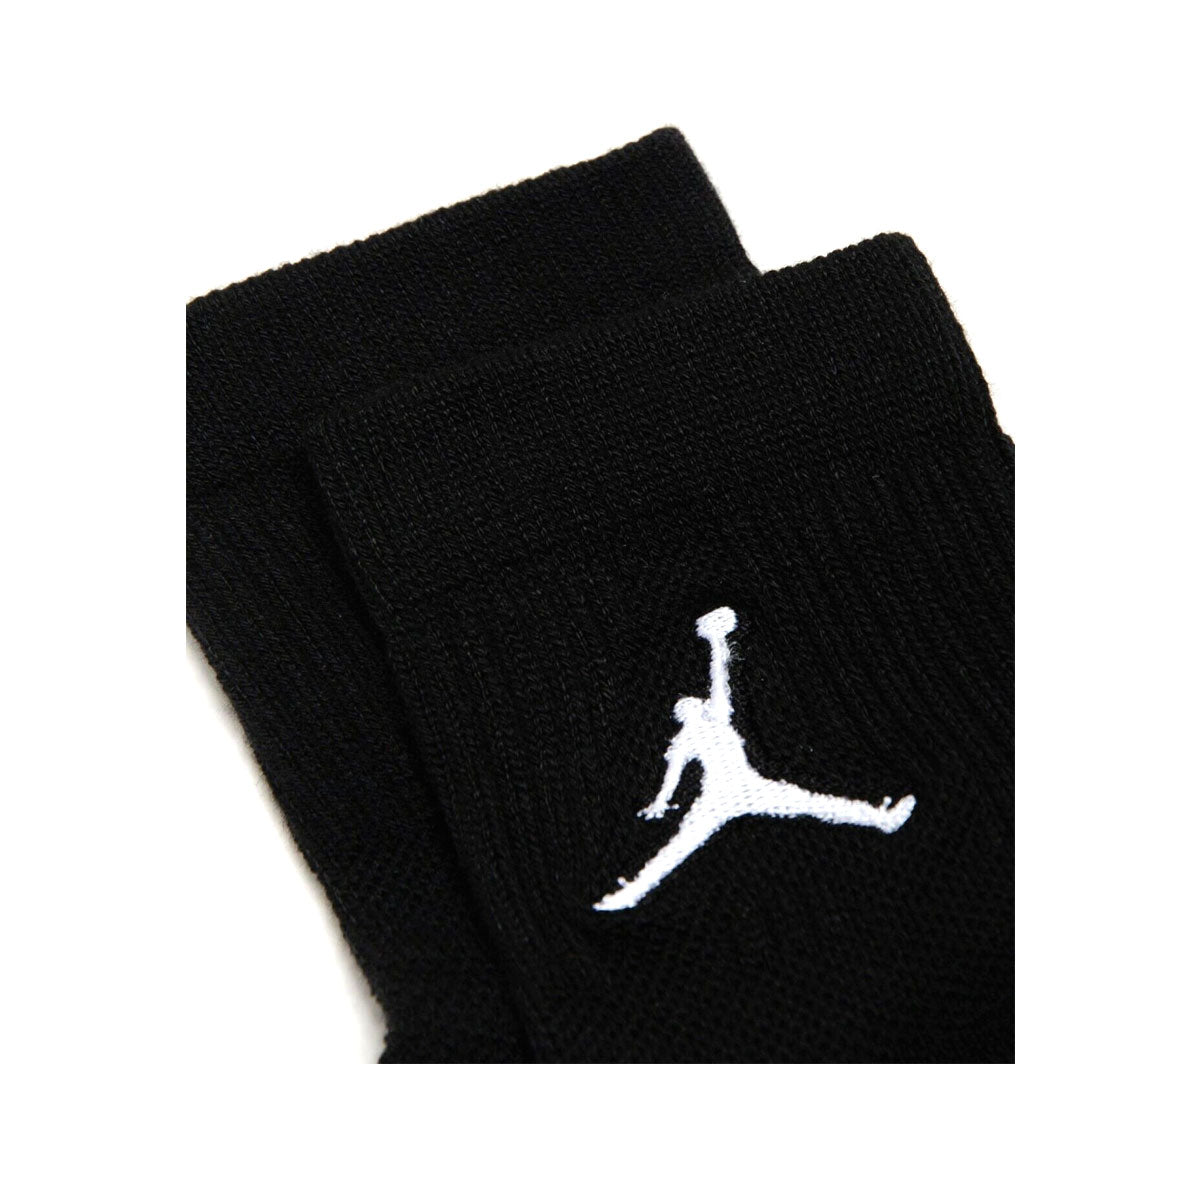 Jordan Men's Everyday Max Ankles 3 Pairs Socks - KickzStore